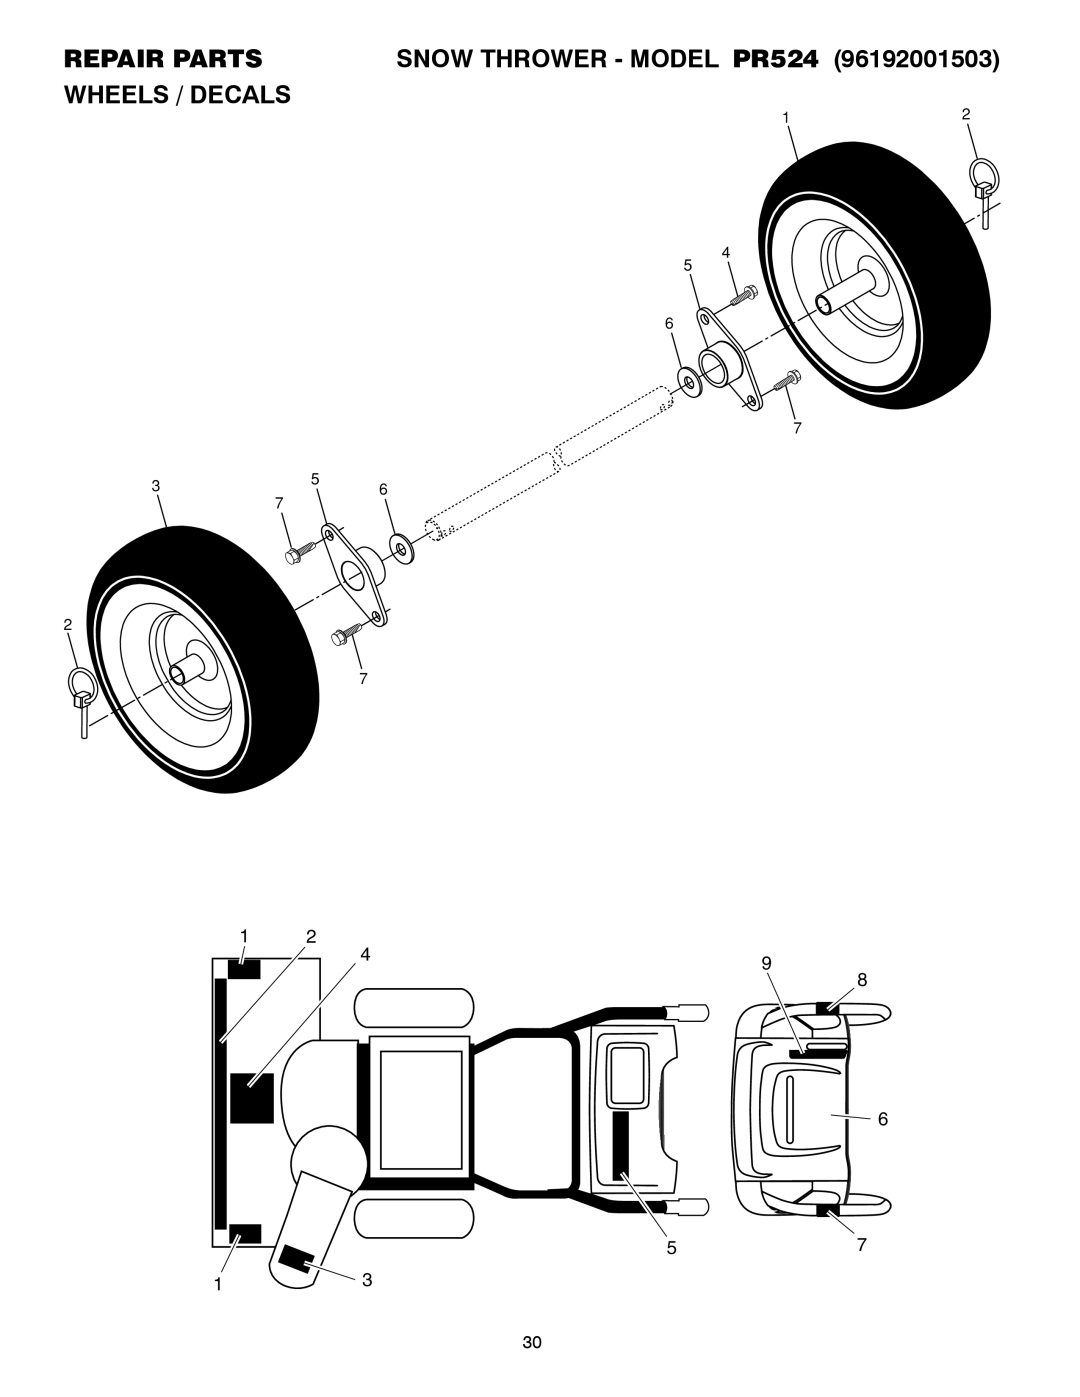 Poulan 418971 owner manual Wheels / Decals, Repair Parts, SNOW THROWER - MODEL PR524 